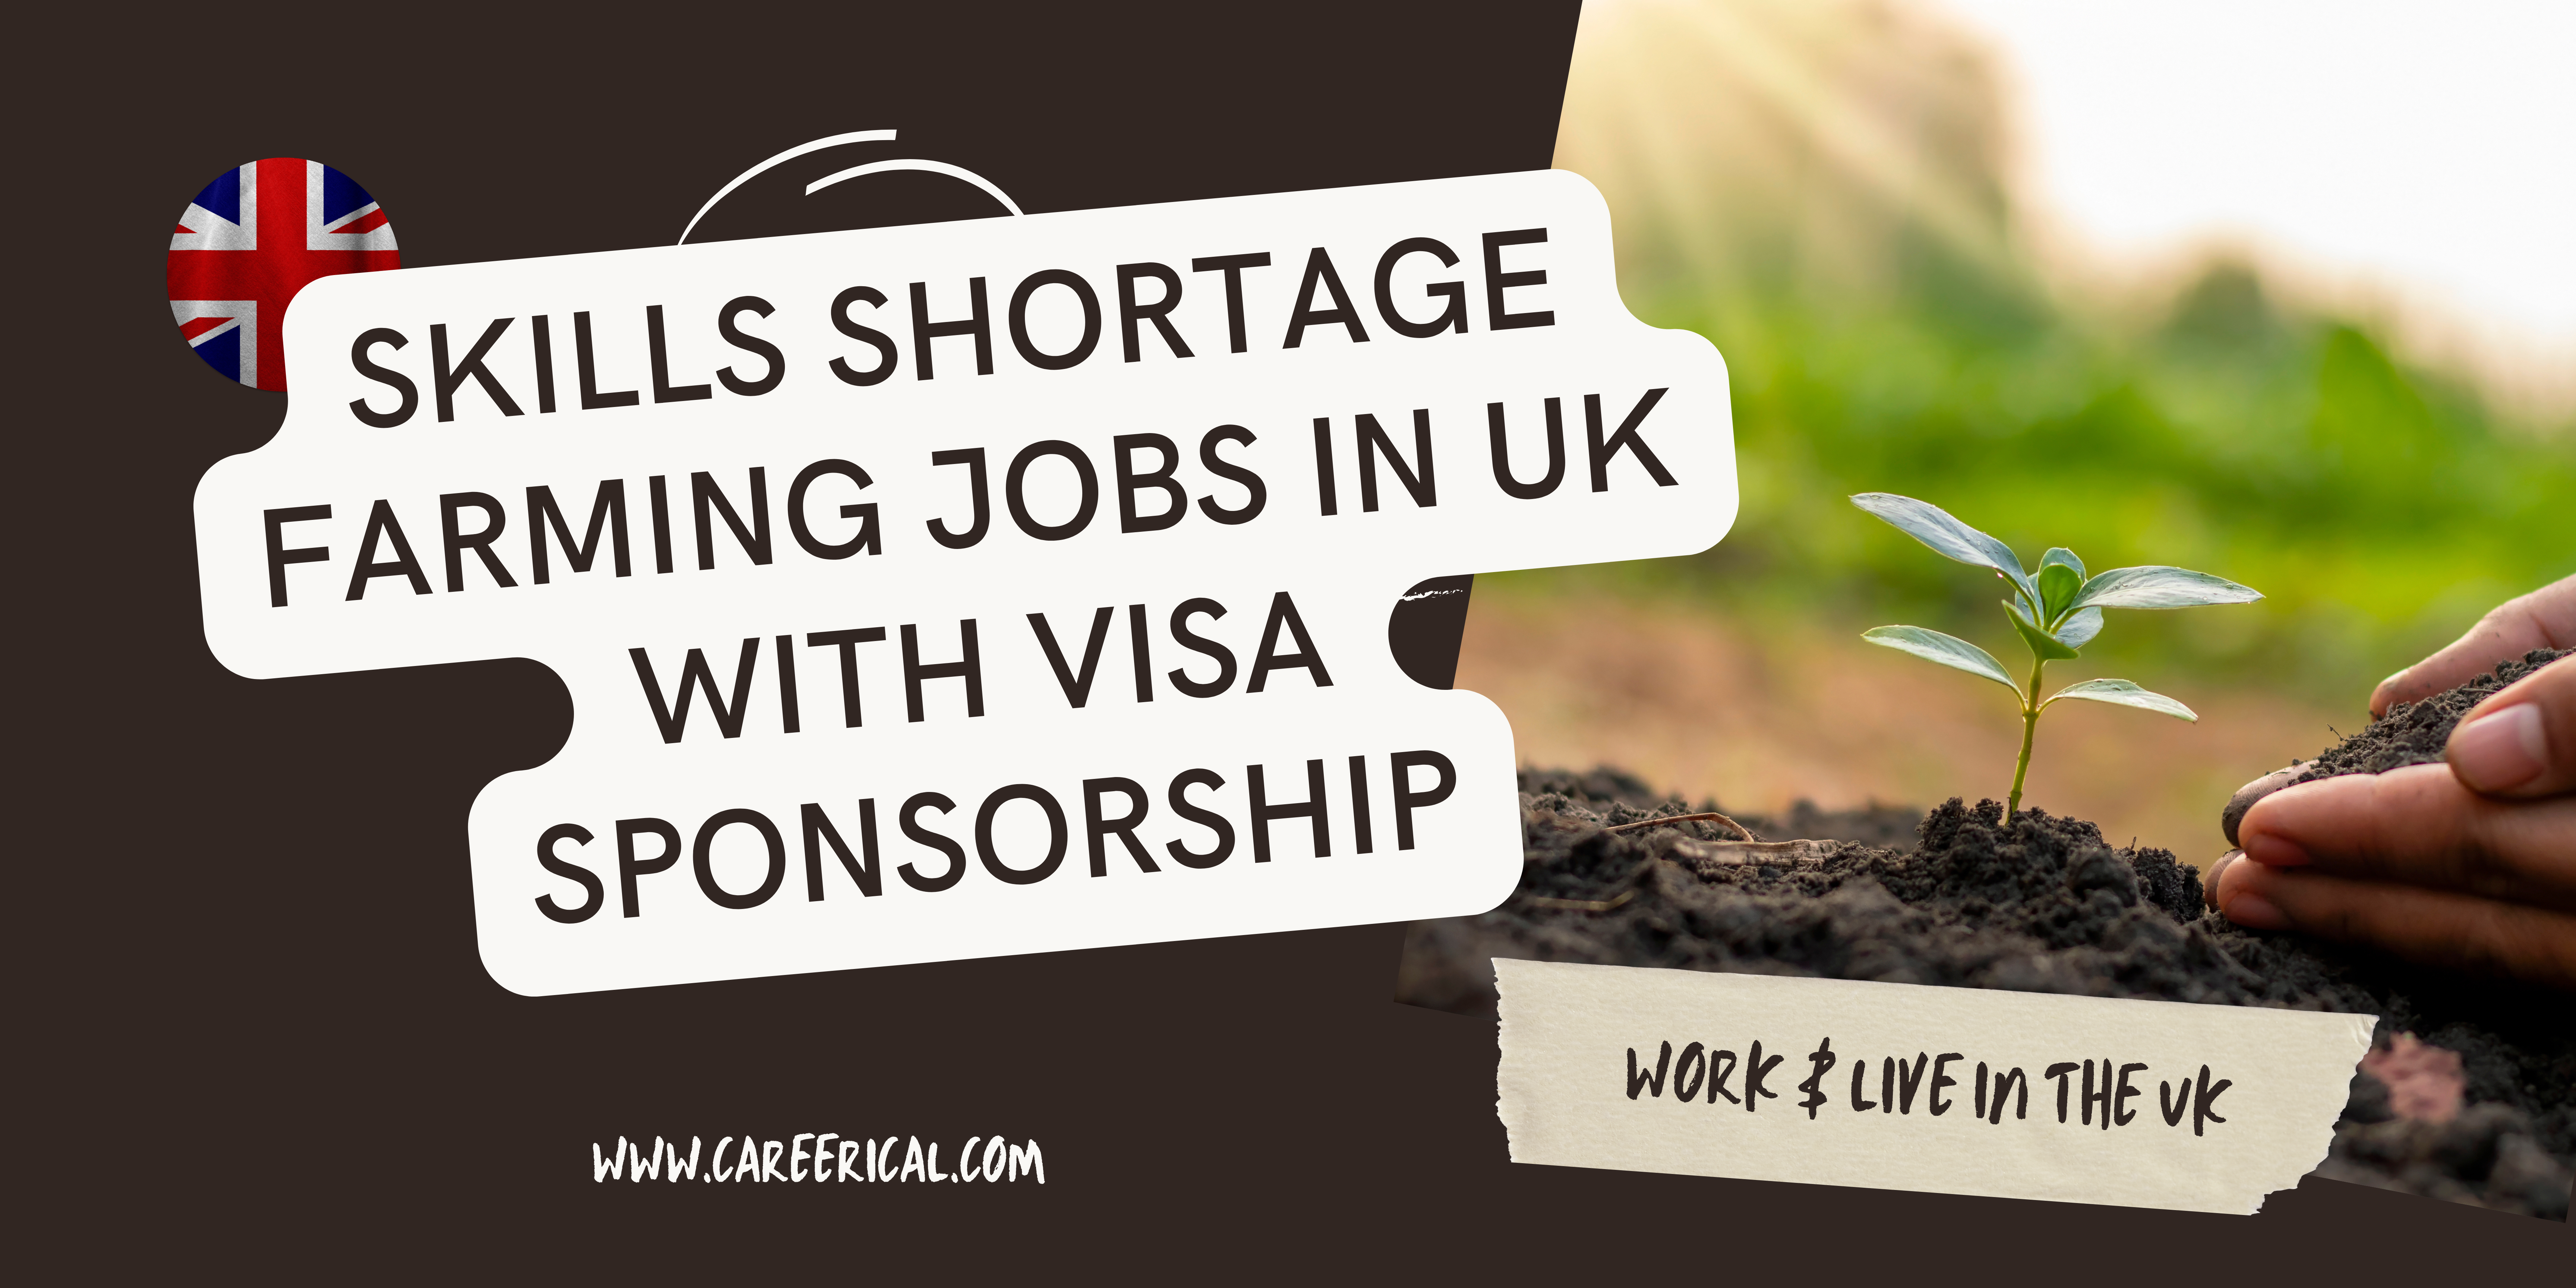 Skills Shortage Farming Jobs in UK with Visa Sponsorship